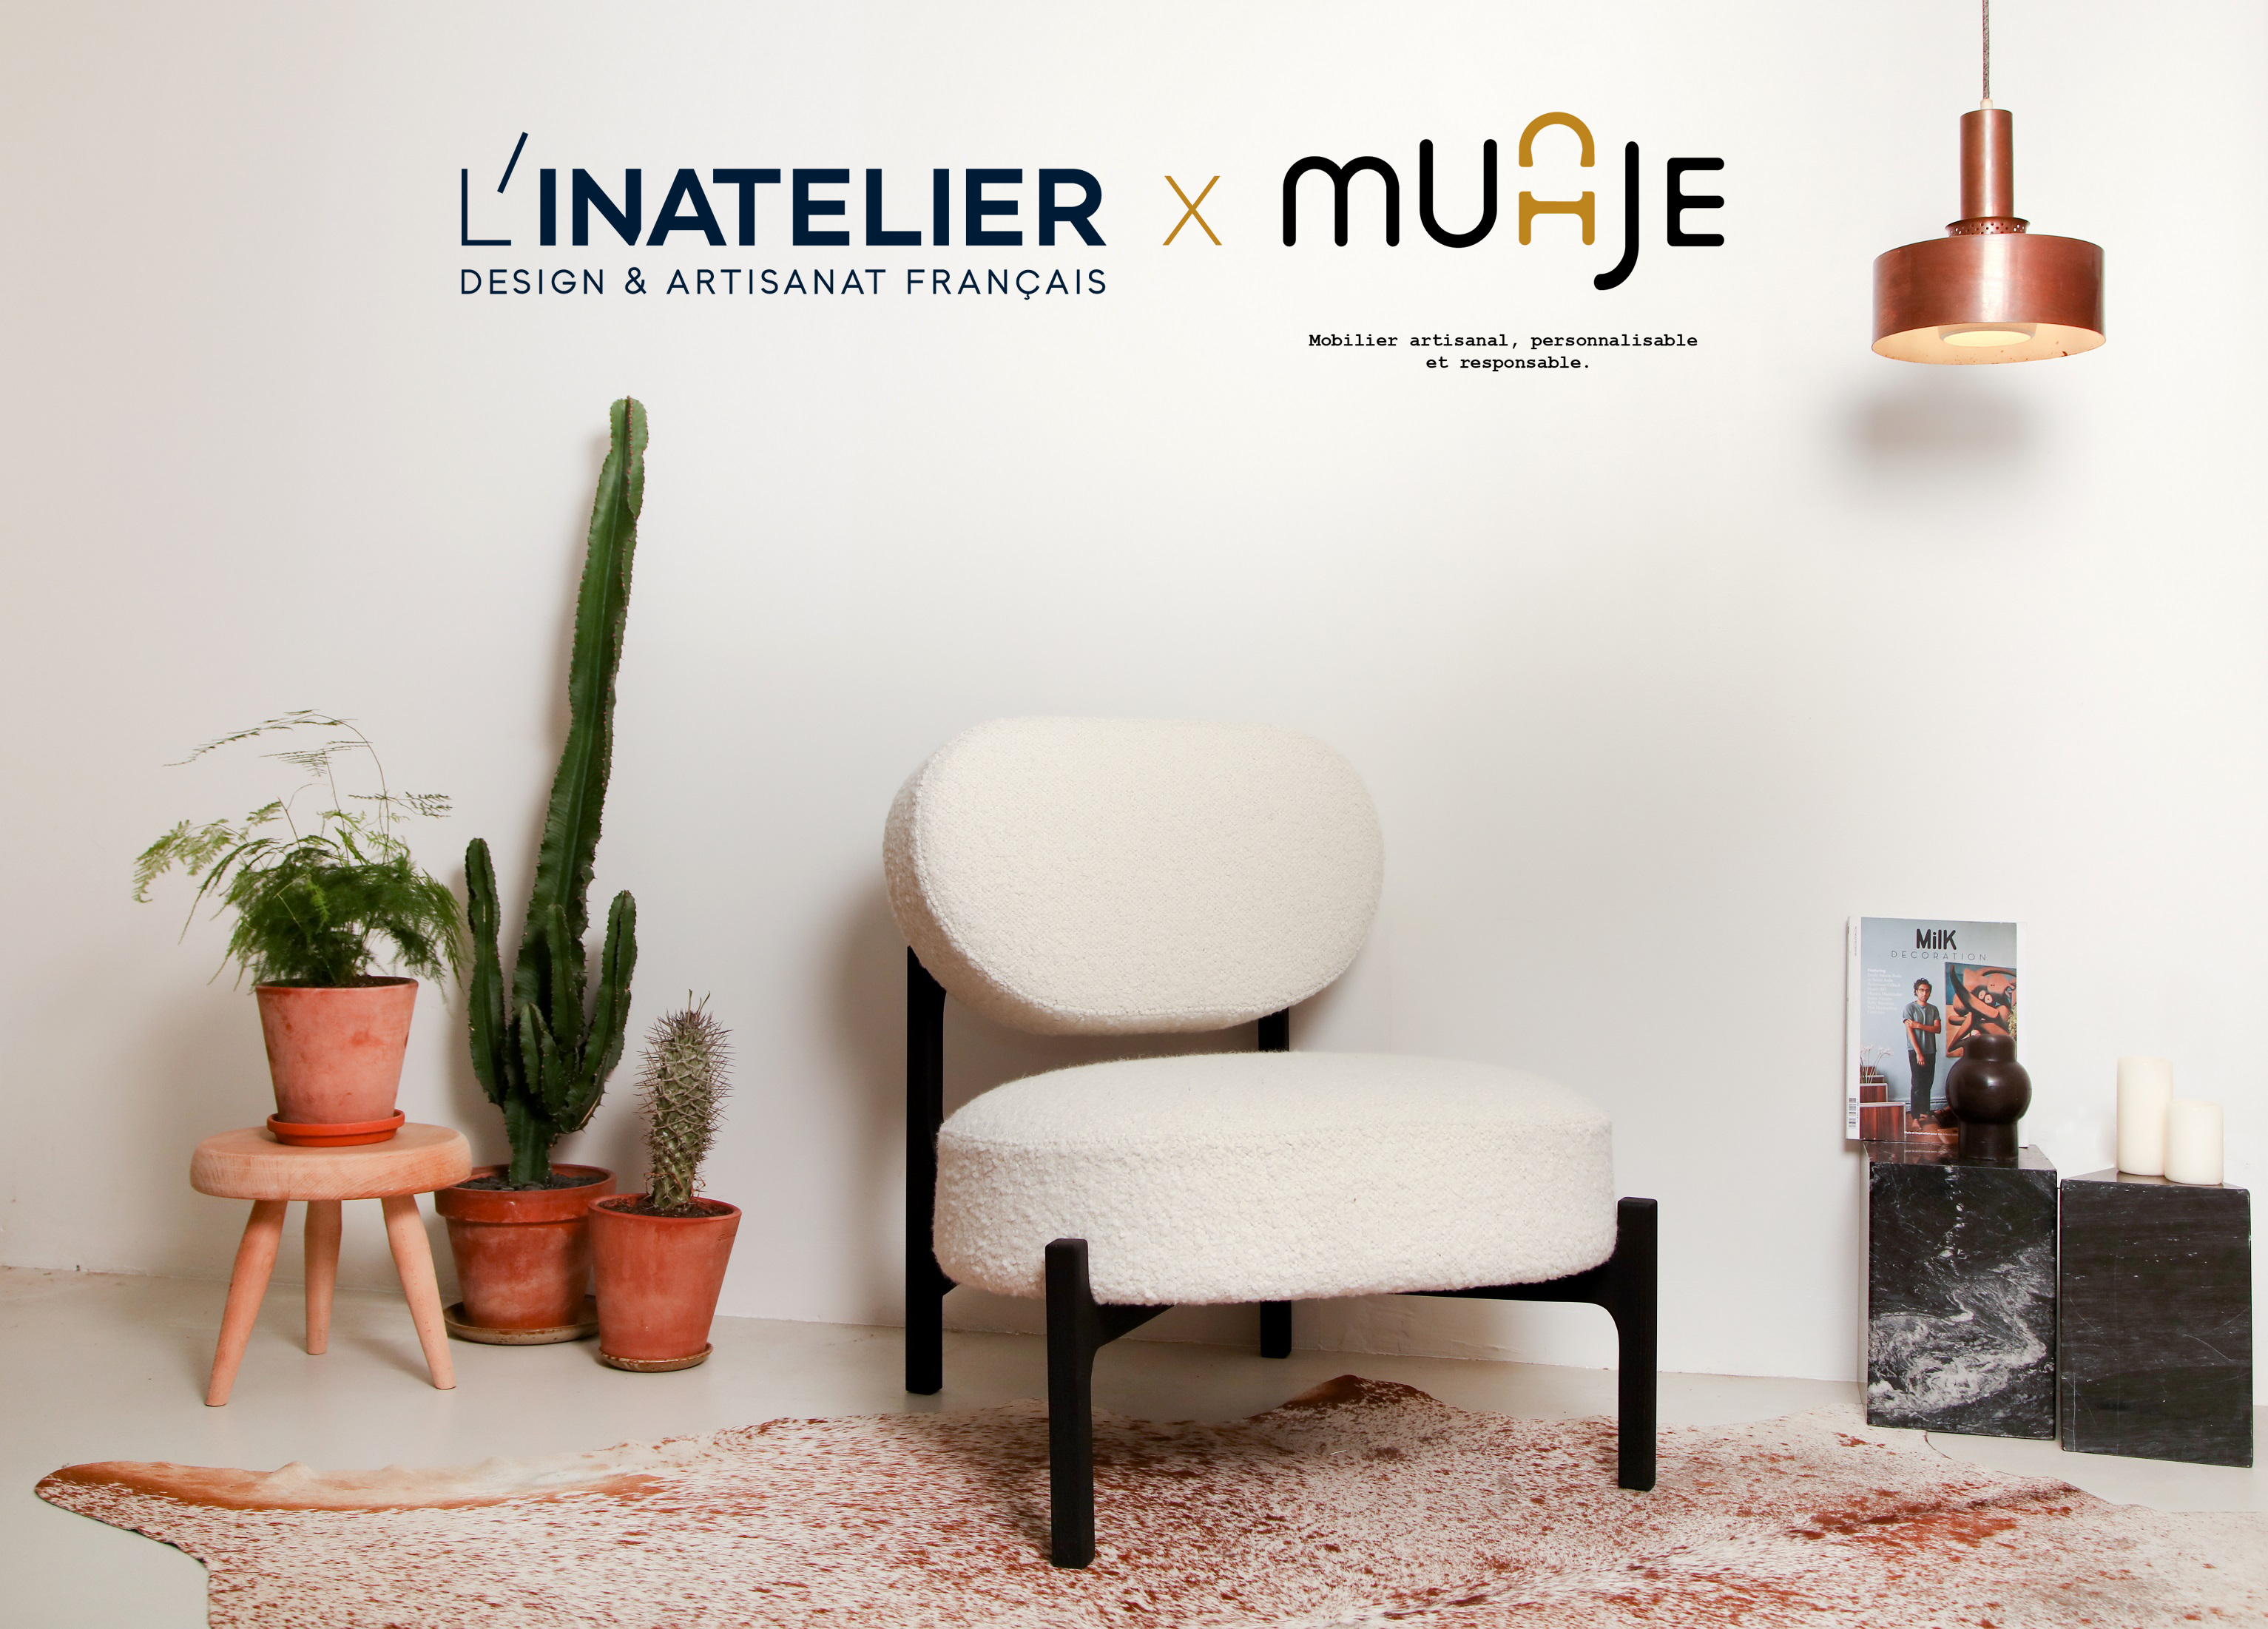 Linatelier x Muaje_PATRICE MOLLE